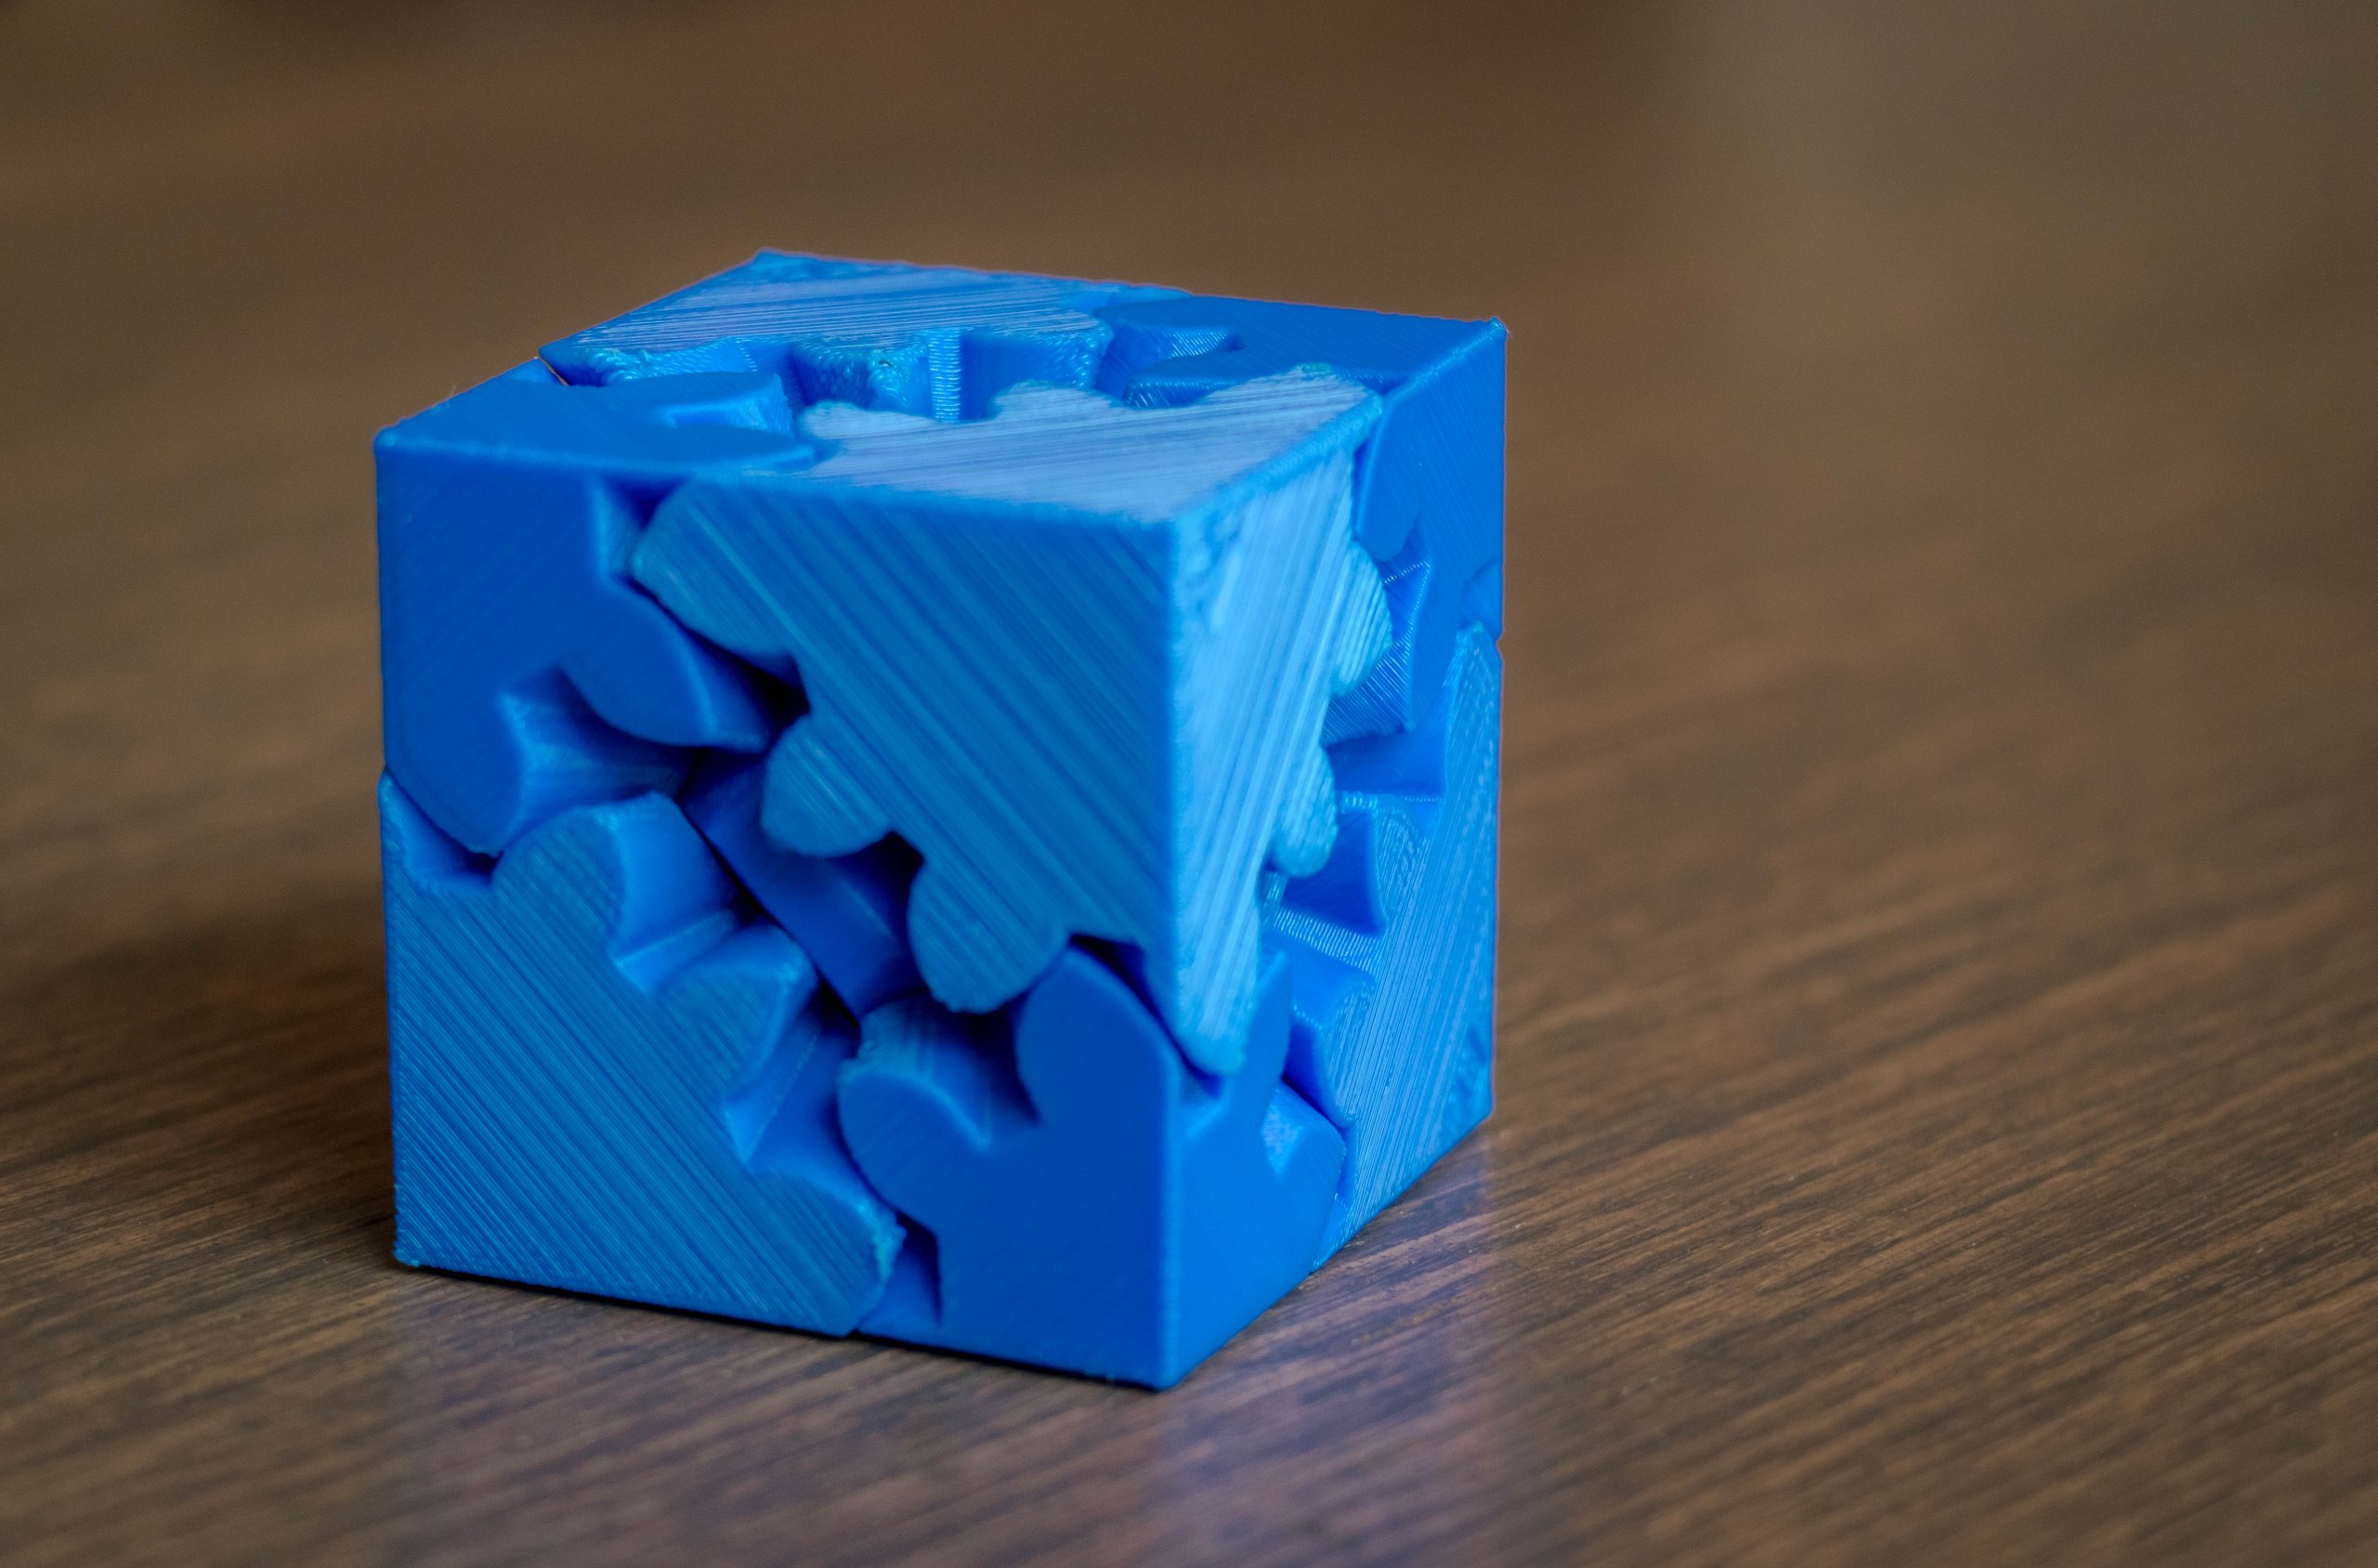 Cube модели. 3d принтер куб. 3d Cube gcode. 3d Printed Cube. Кубик 3d Puzzle Cube.